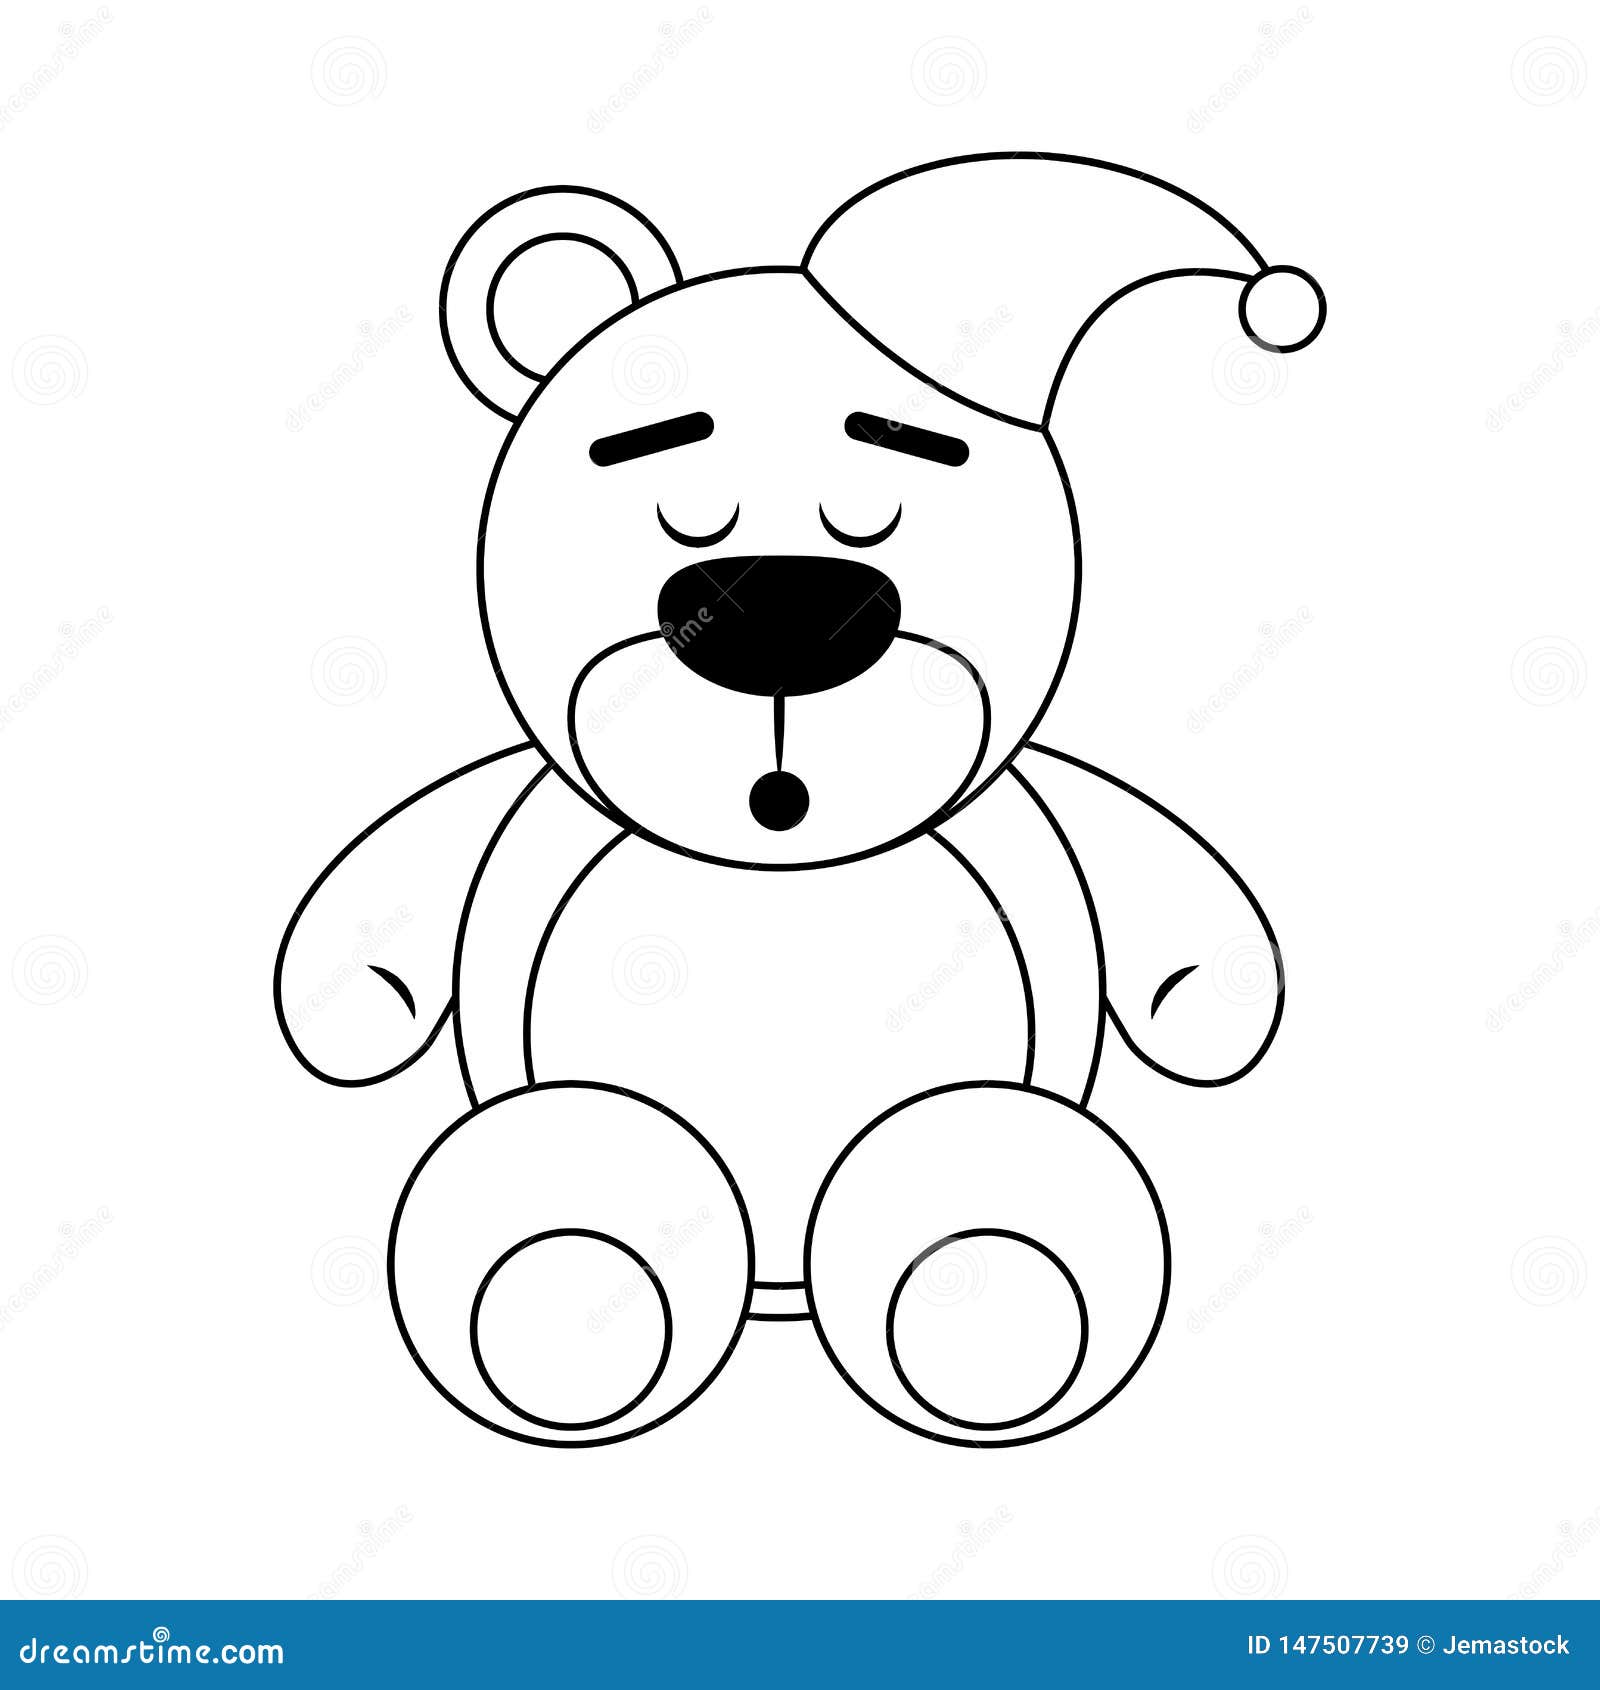 teddy bear with pijama hat cartoon